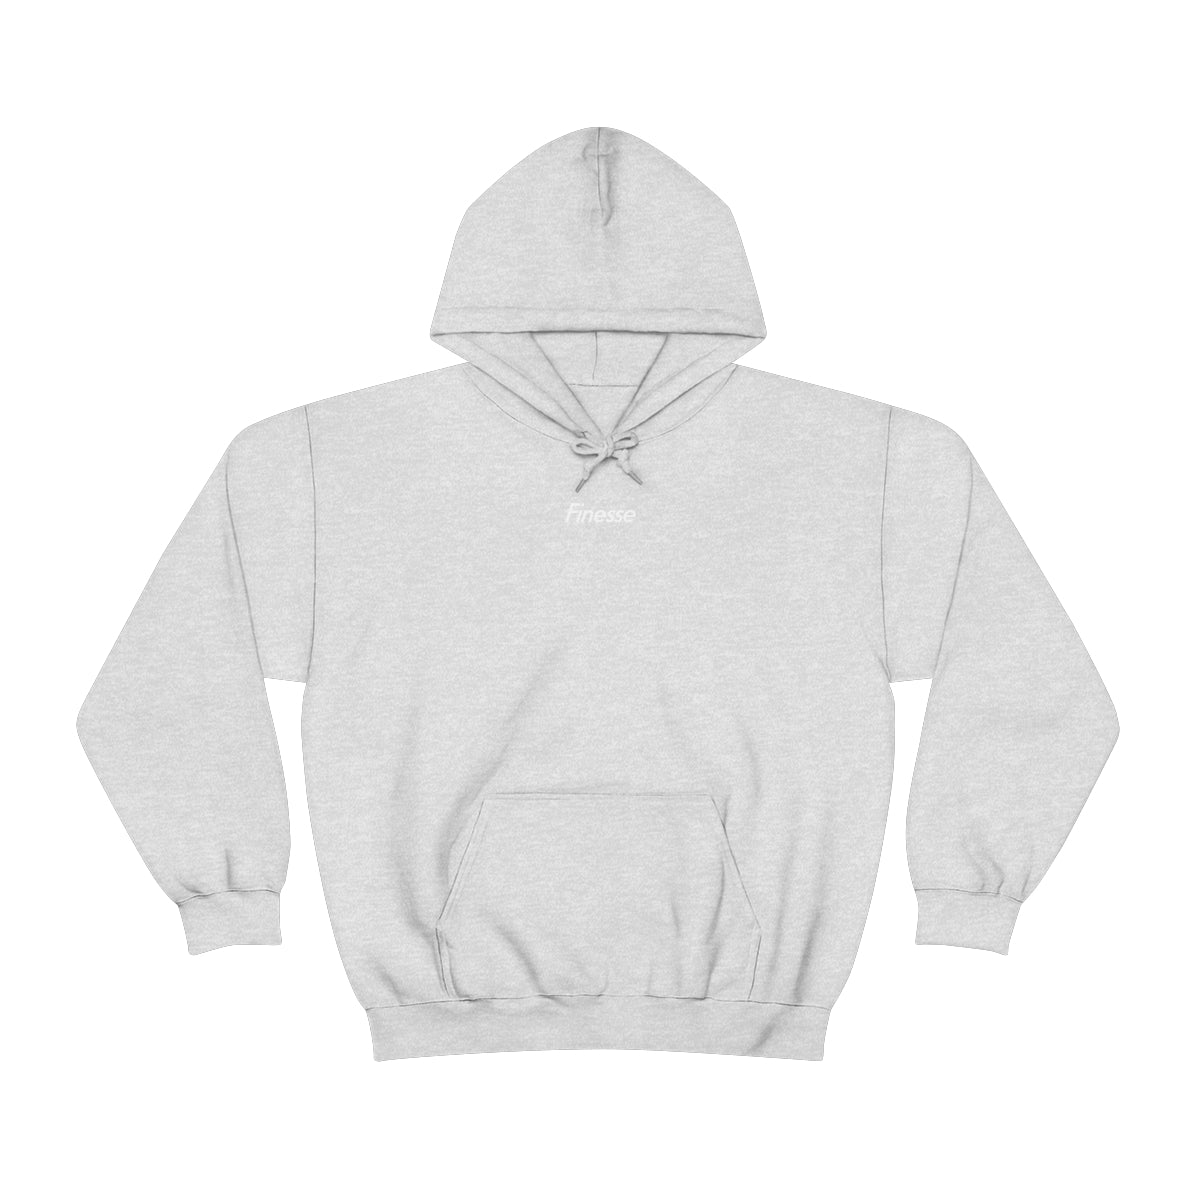 Finesse - Hooded Sweatshirt | Hoodie | PARADIS SVP